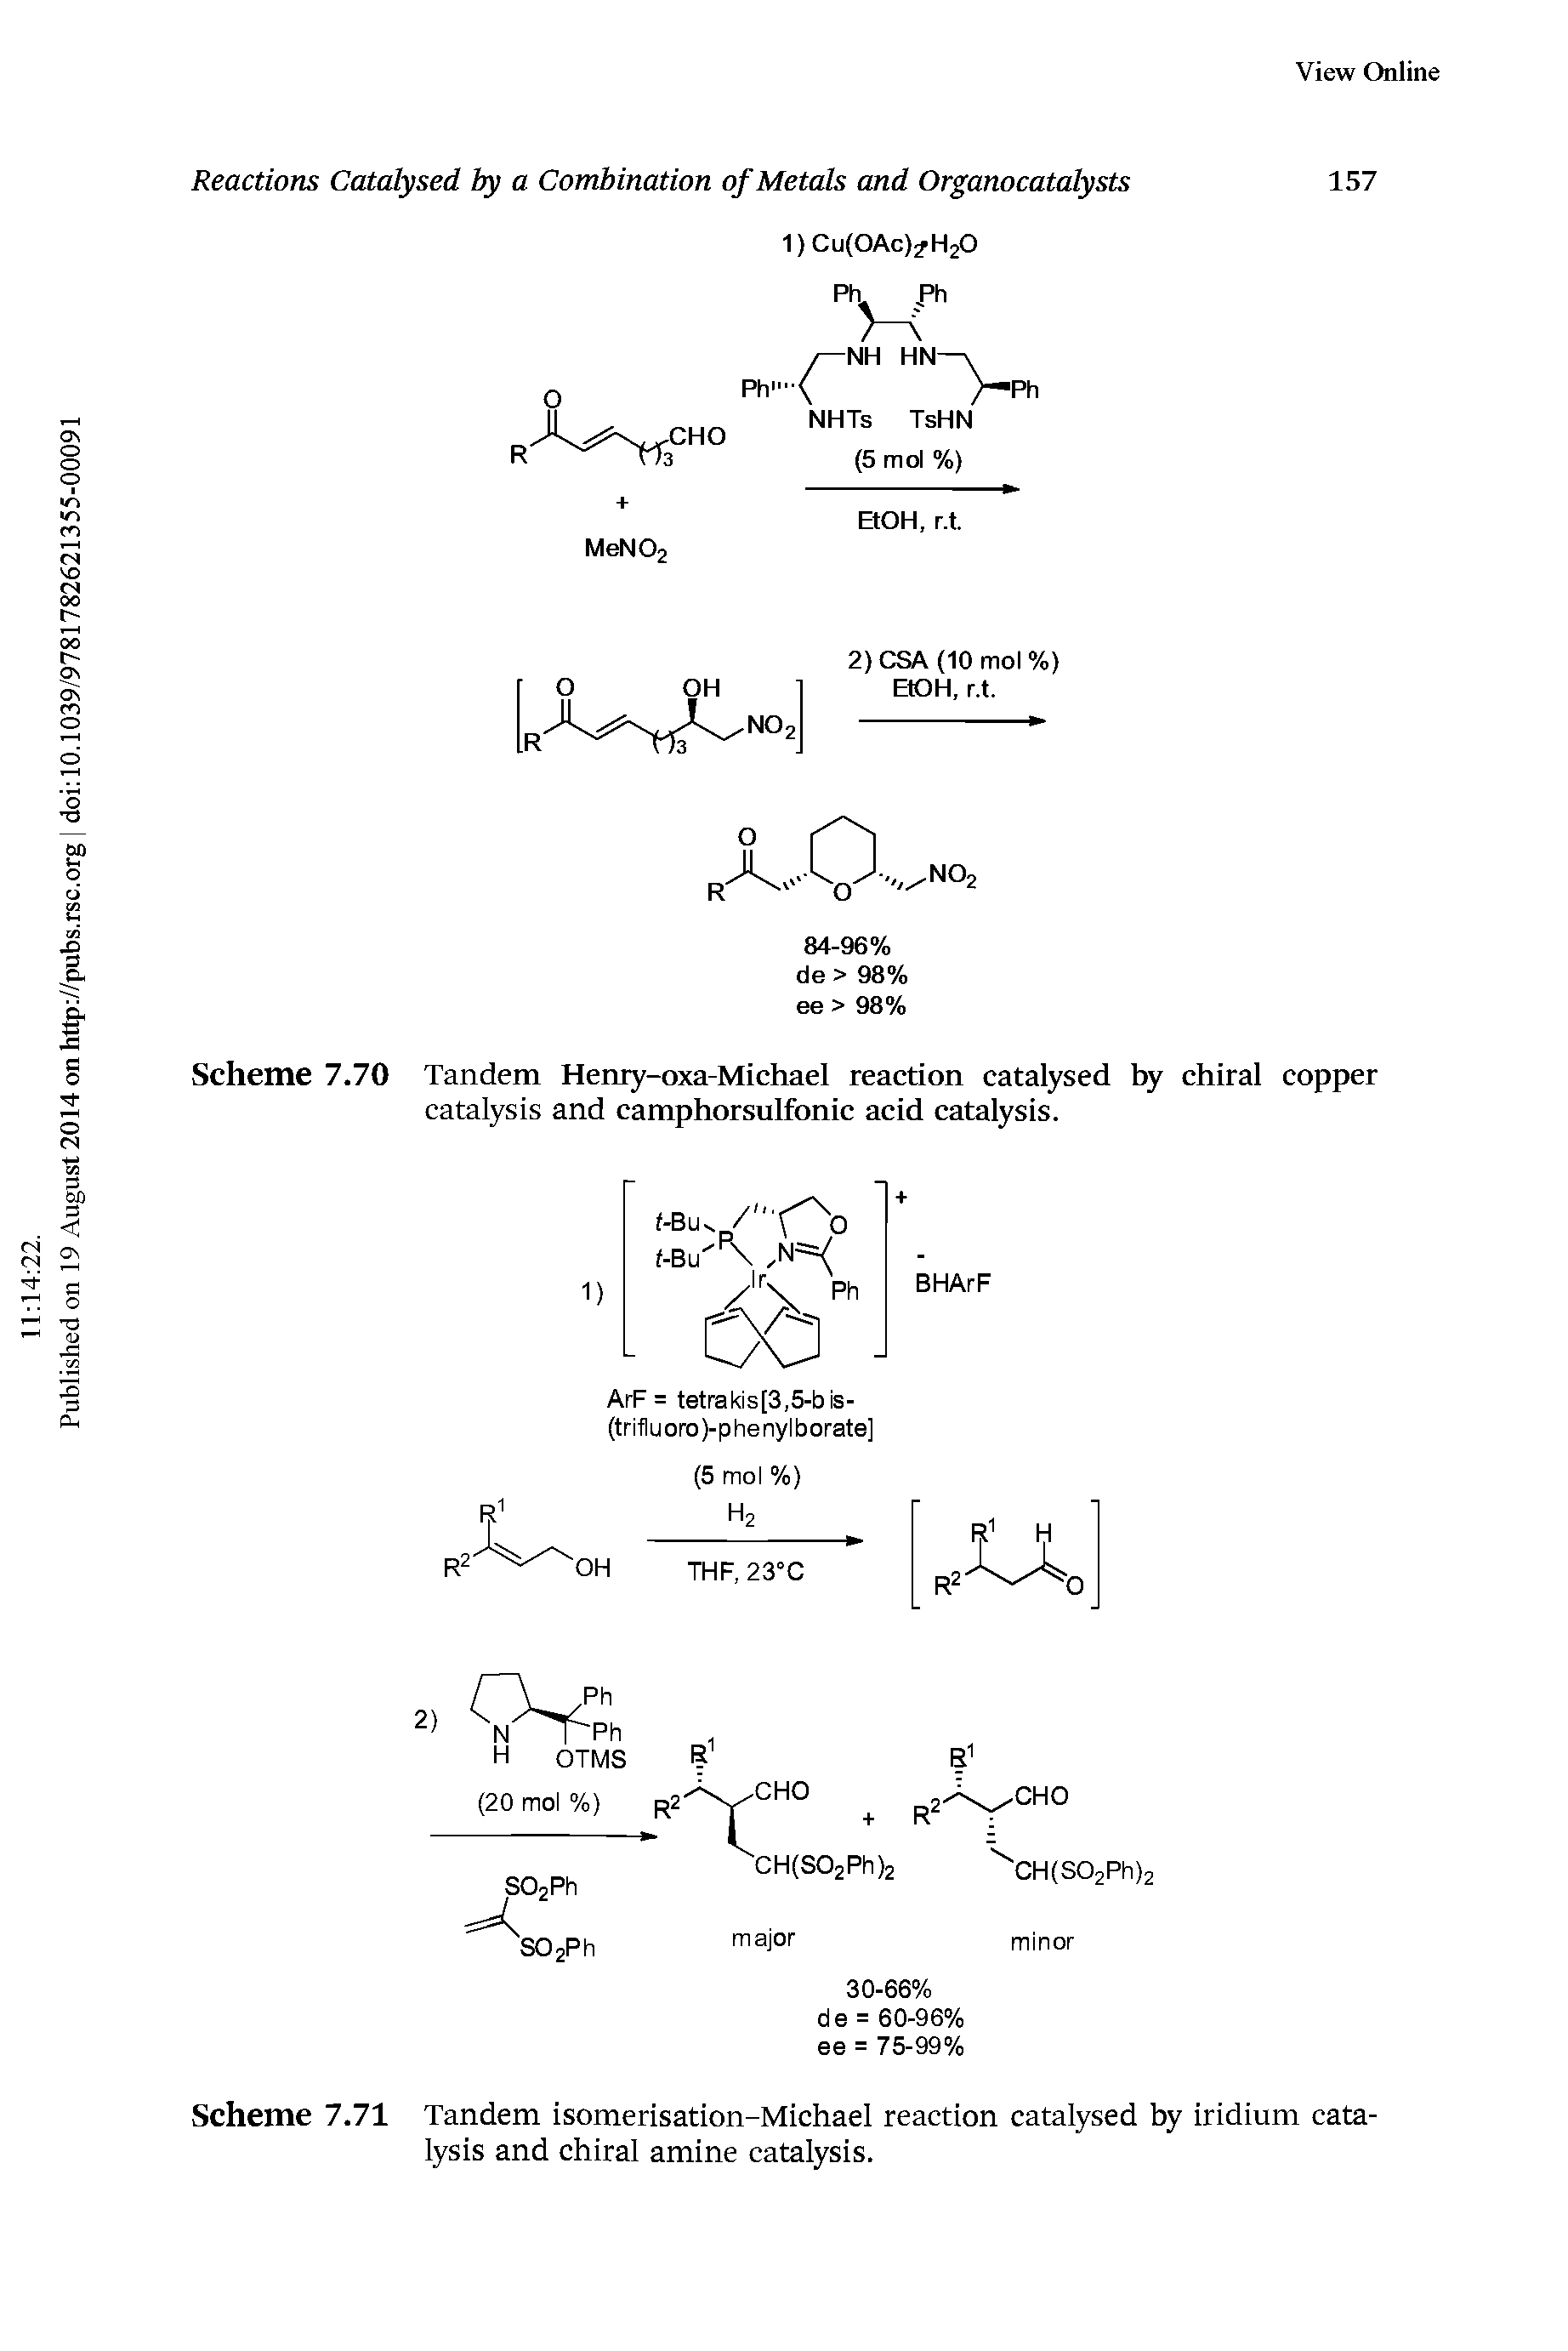 Scheme 7.71 Tandem isomerisation-Michael reaction catalysed by iridium catalysis and chiral amine catalysis.